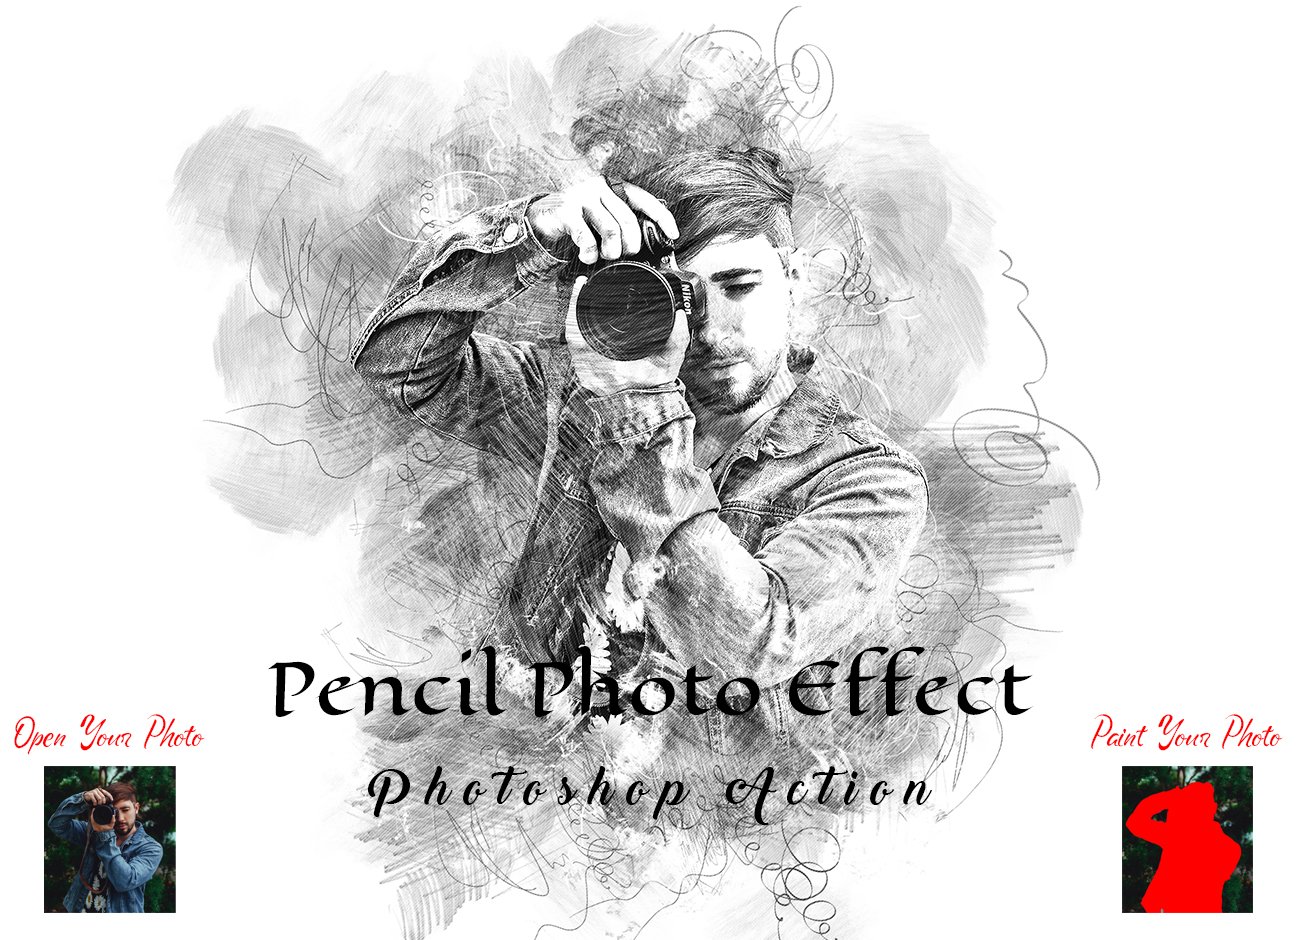 Pencil Photo Effect Photoshop Actioncover image.